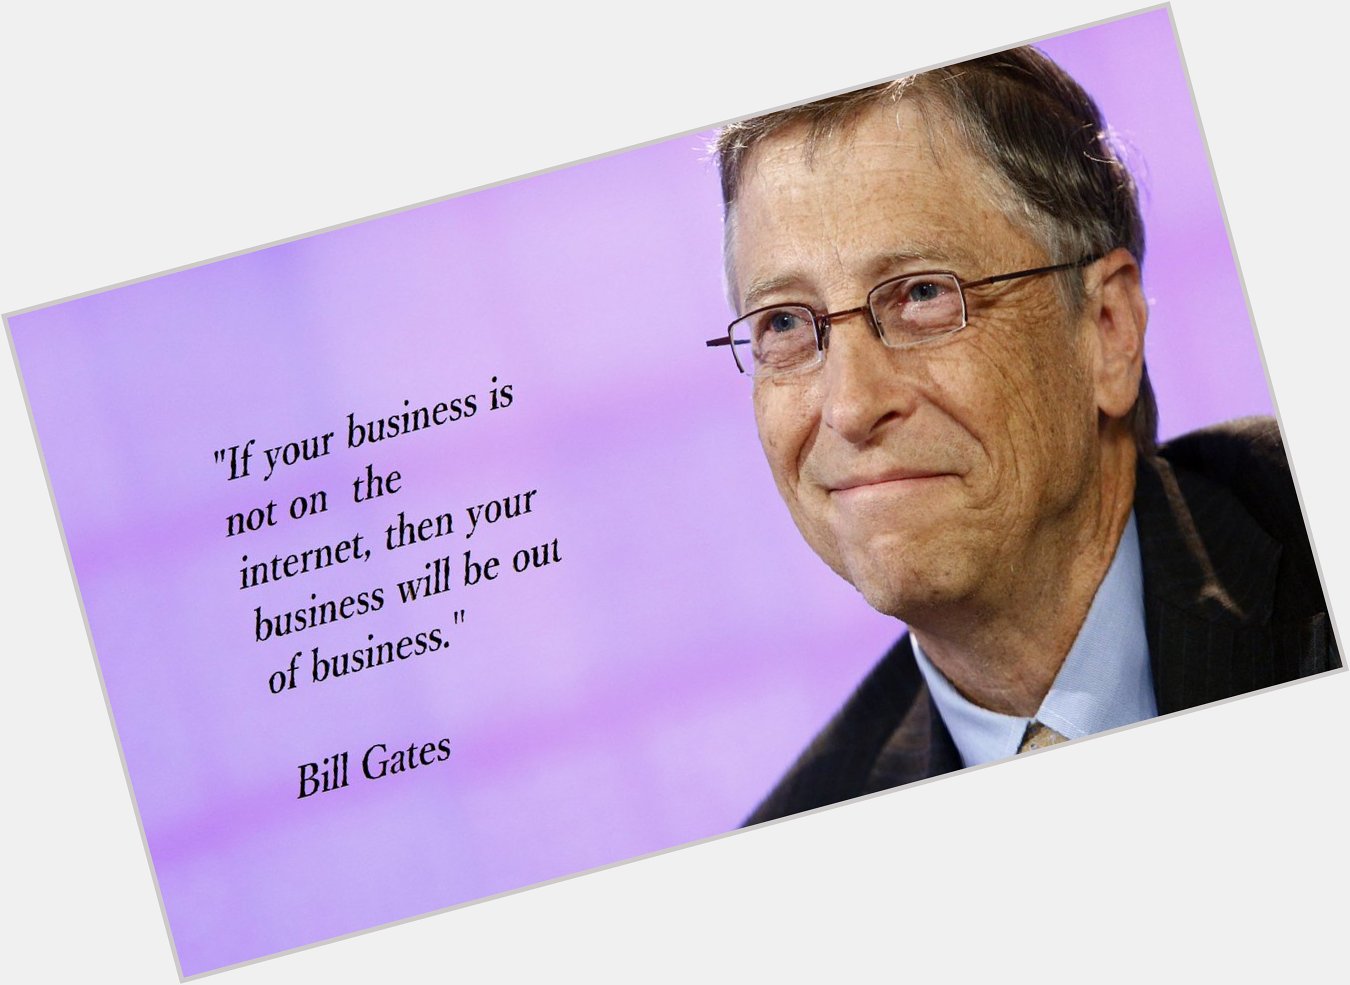 Team Hashtags wishes Bill Gates a very Happy Birthday!   